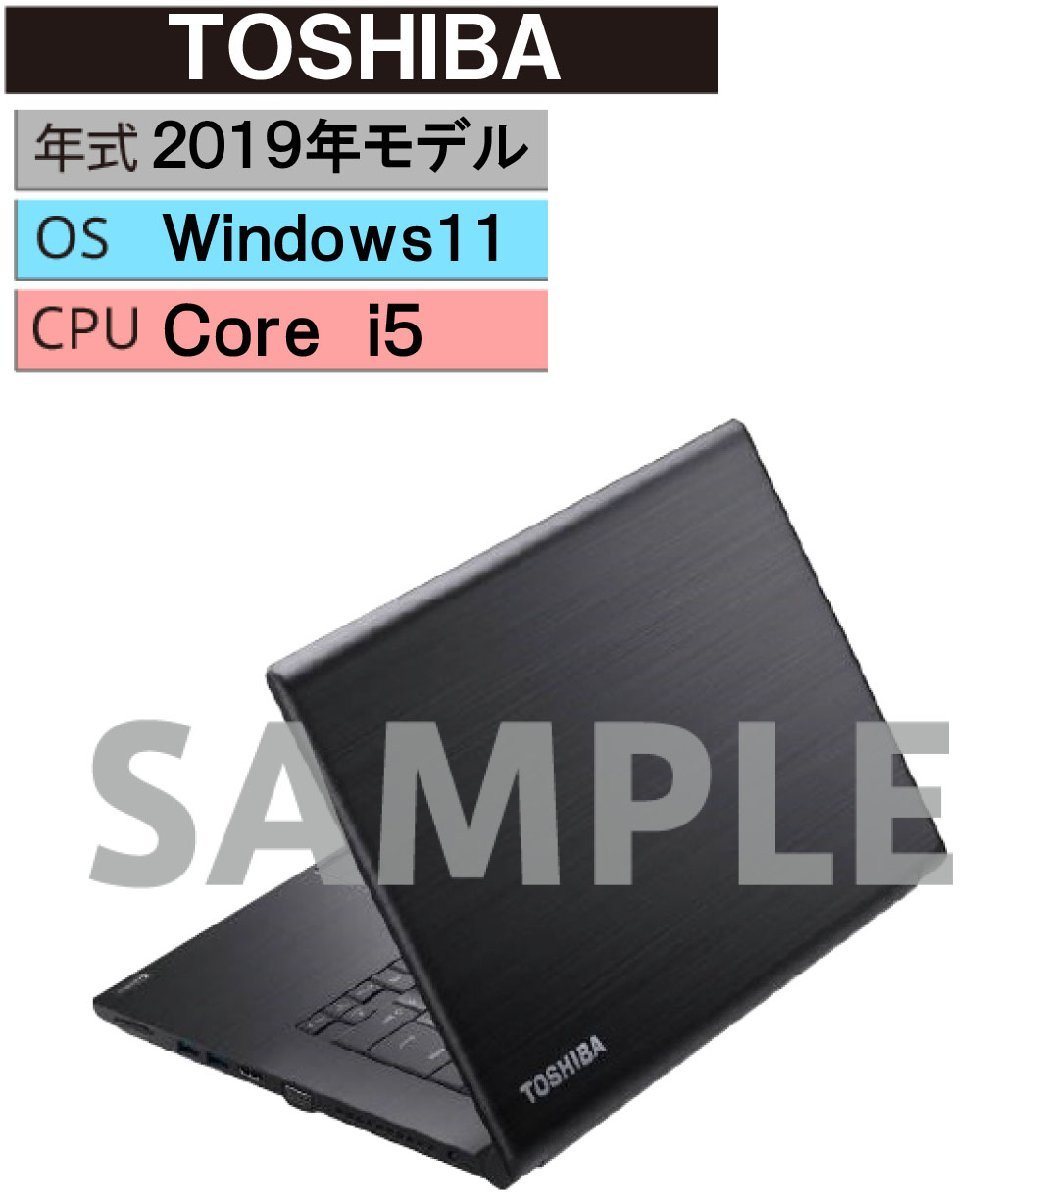 TOSHIBA [Windows] Note PC[ safety guarantee ]